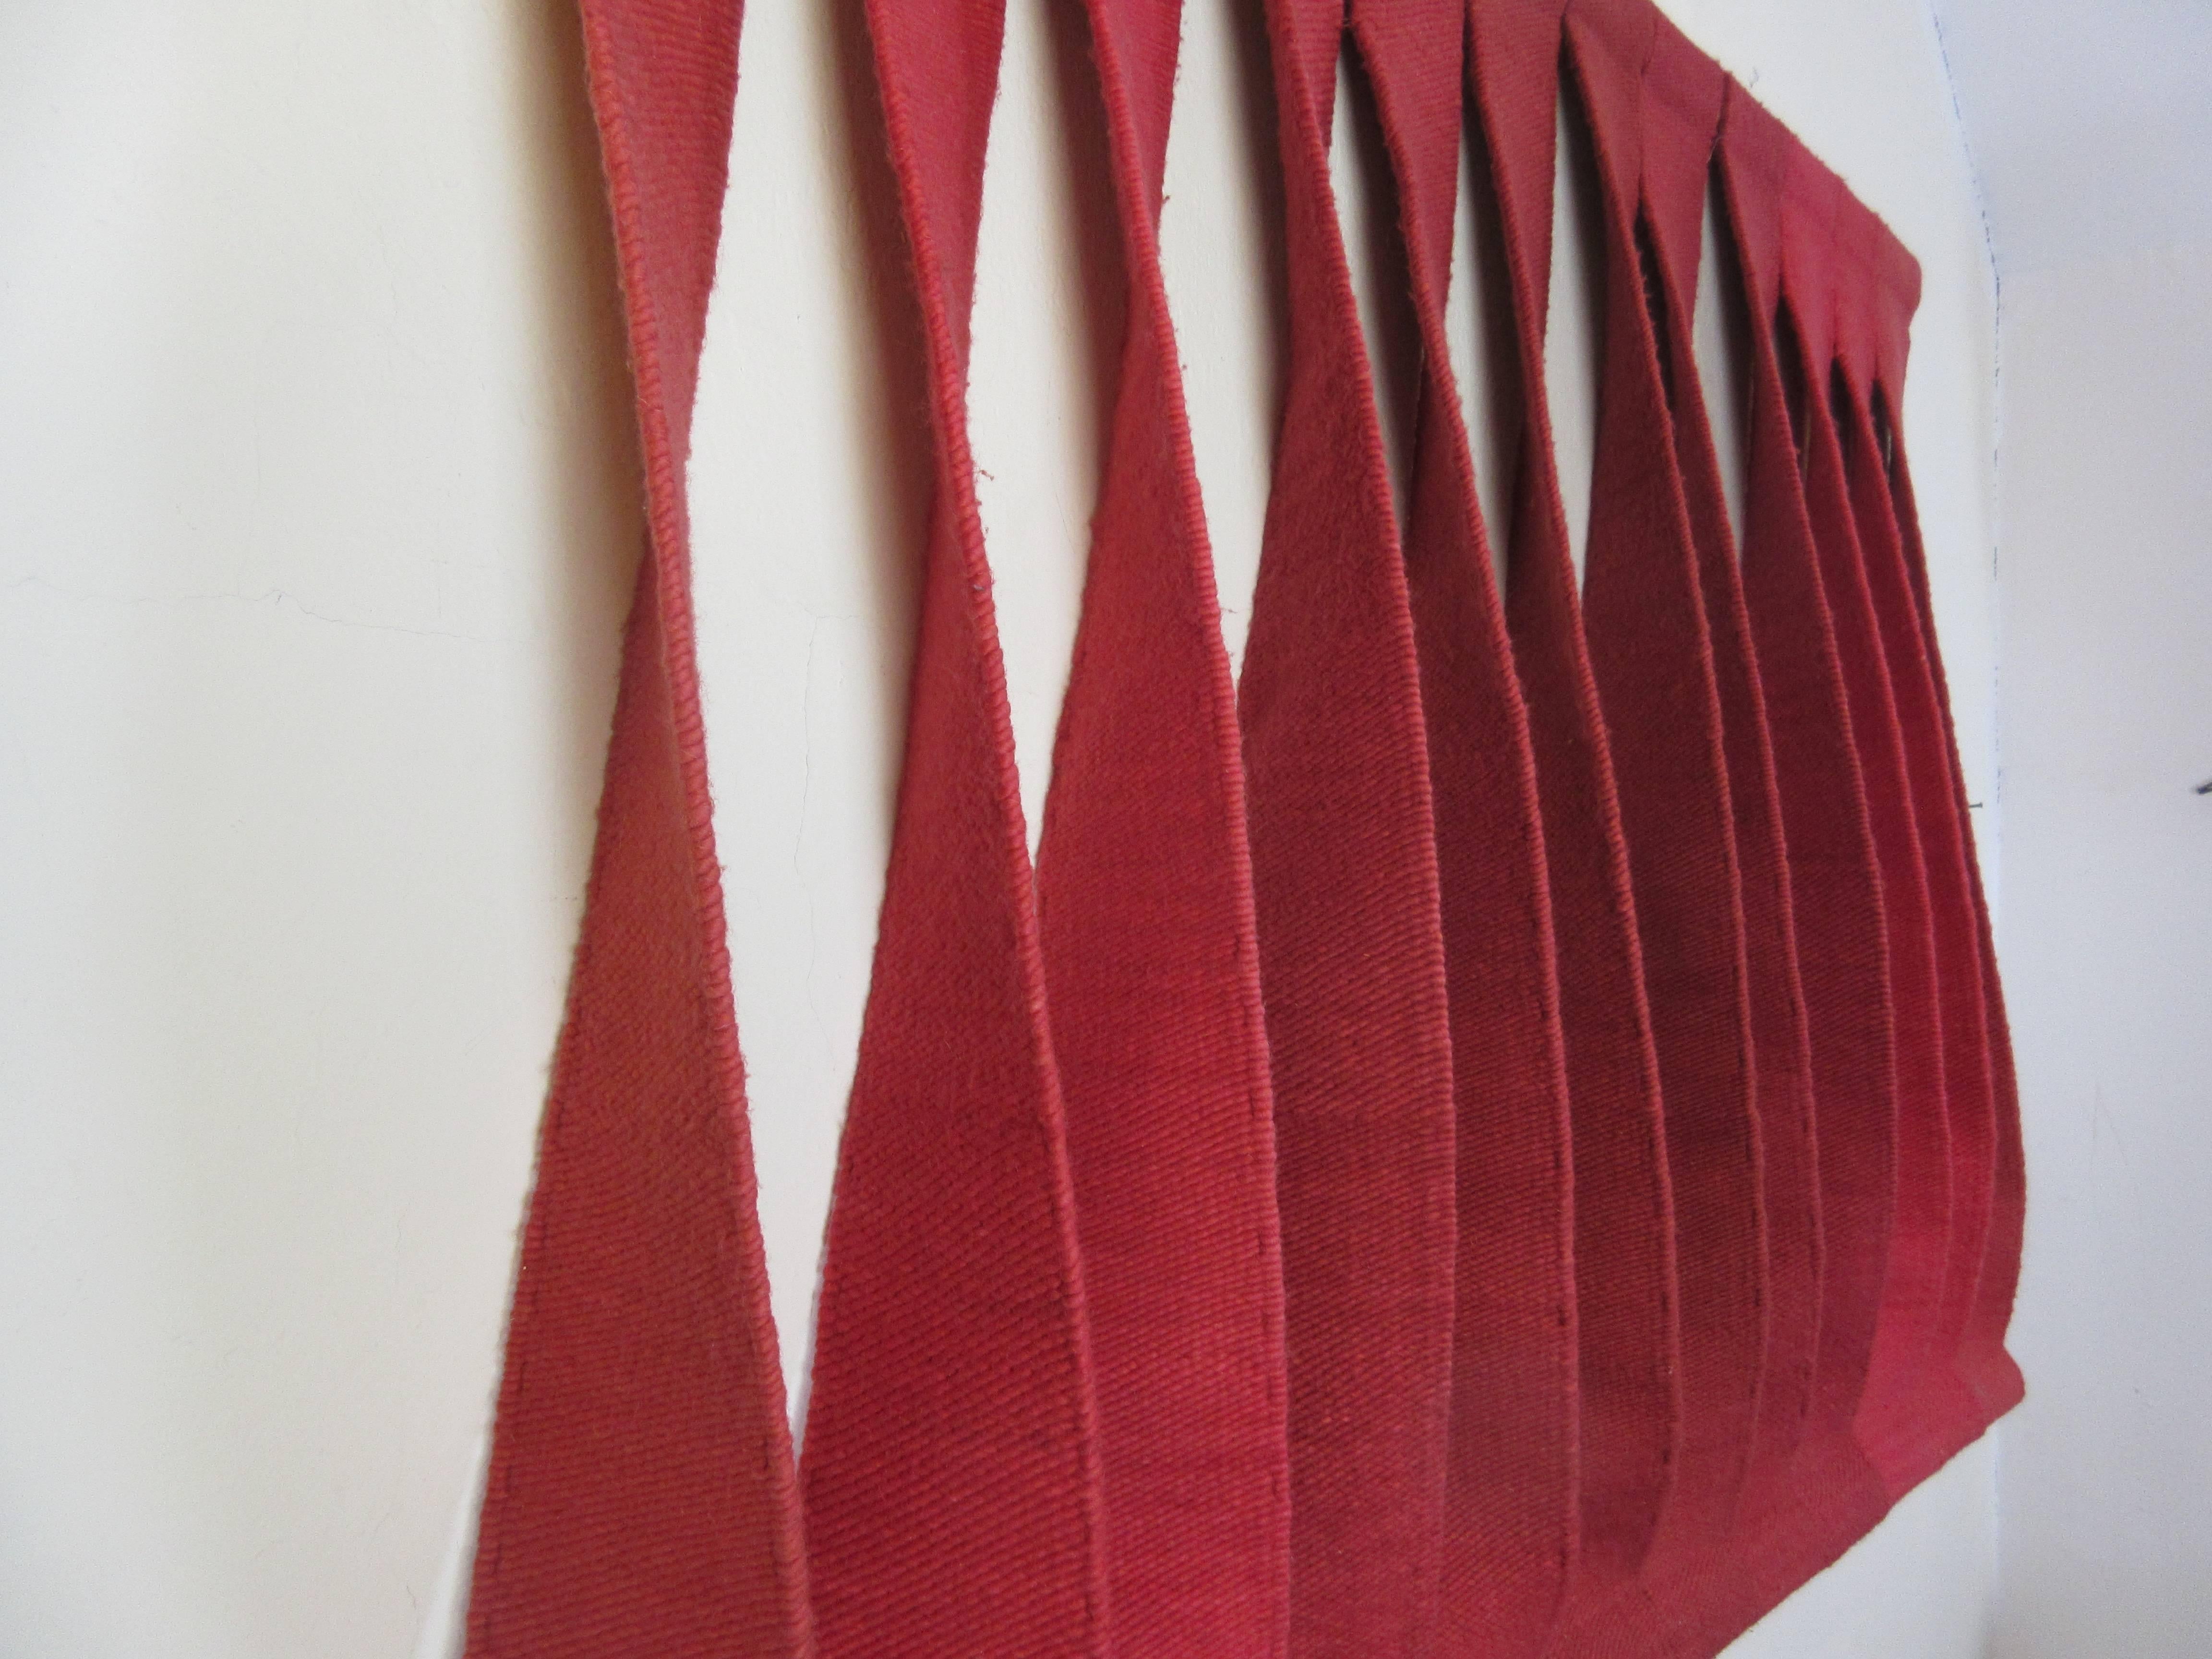 Hand-Woven Joy Rushfelt Fiber Art Piece Spectral Twist by Contemporary Tapestries